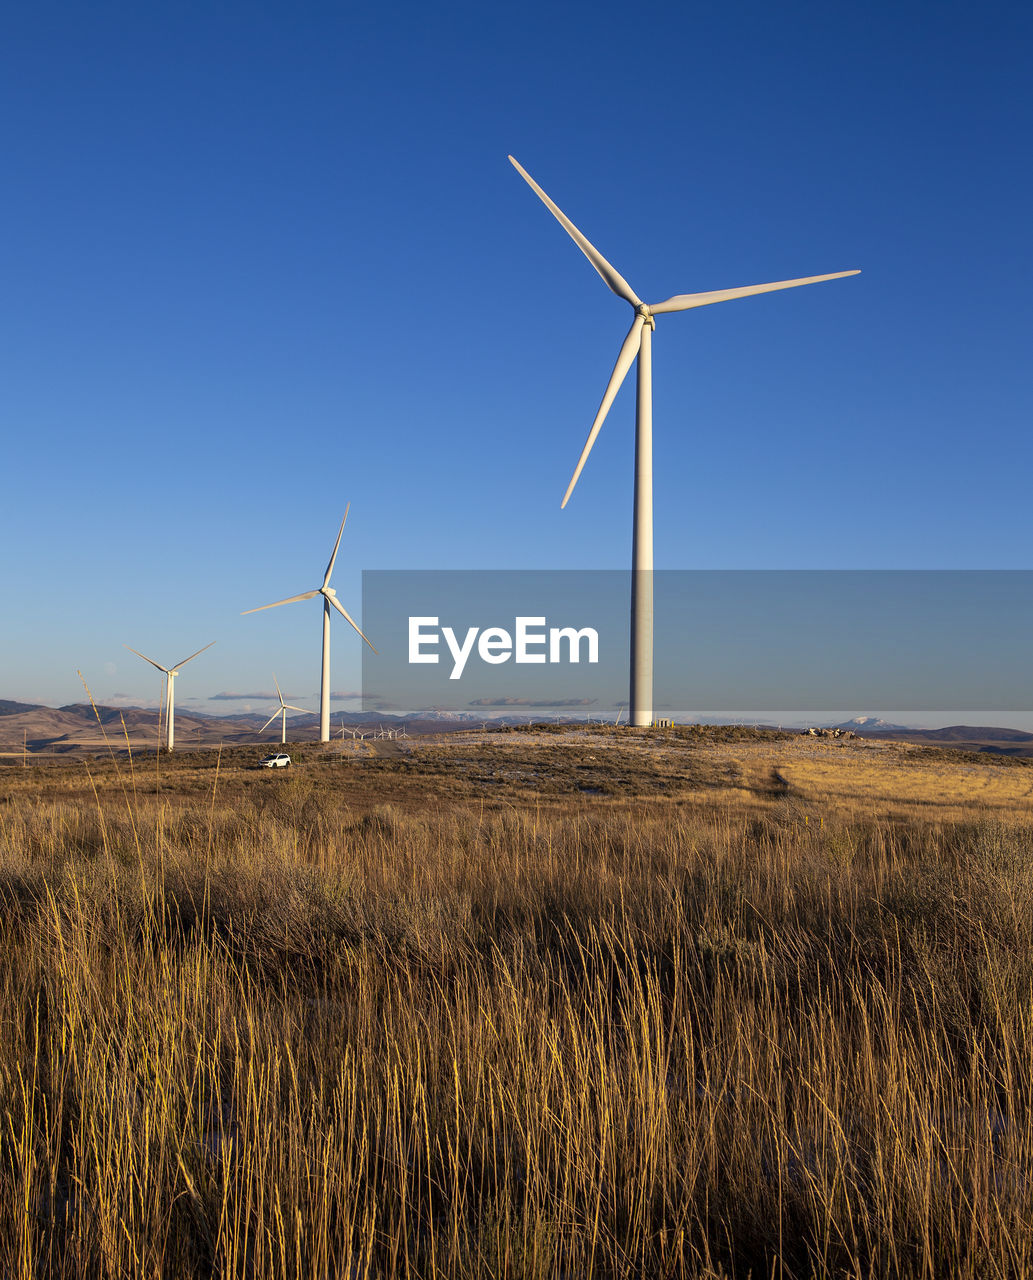 Wind turbines in field against blue sky